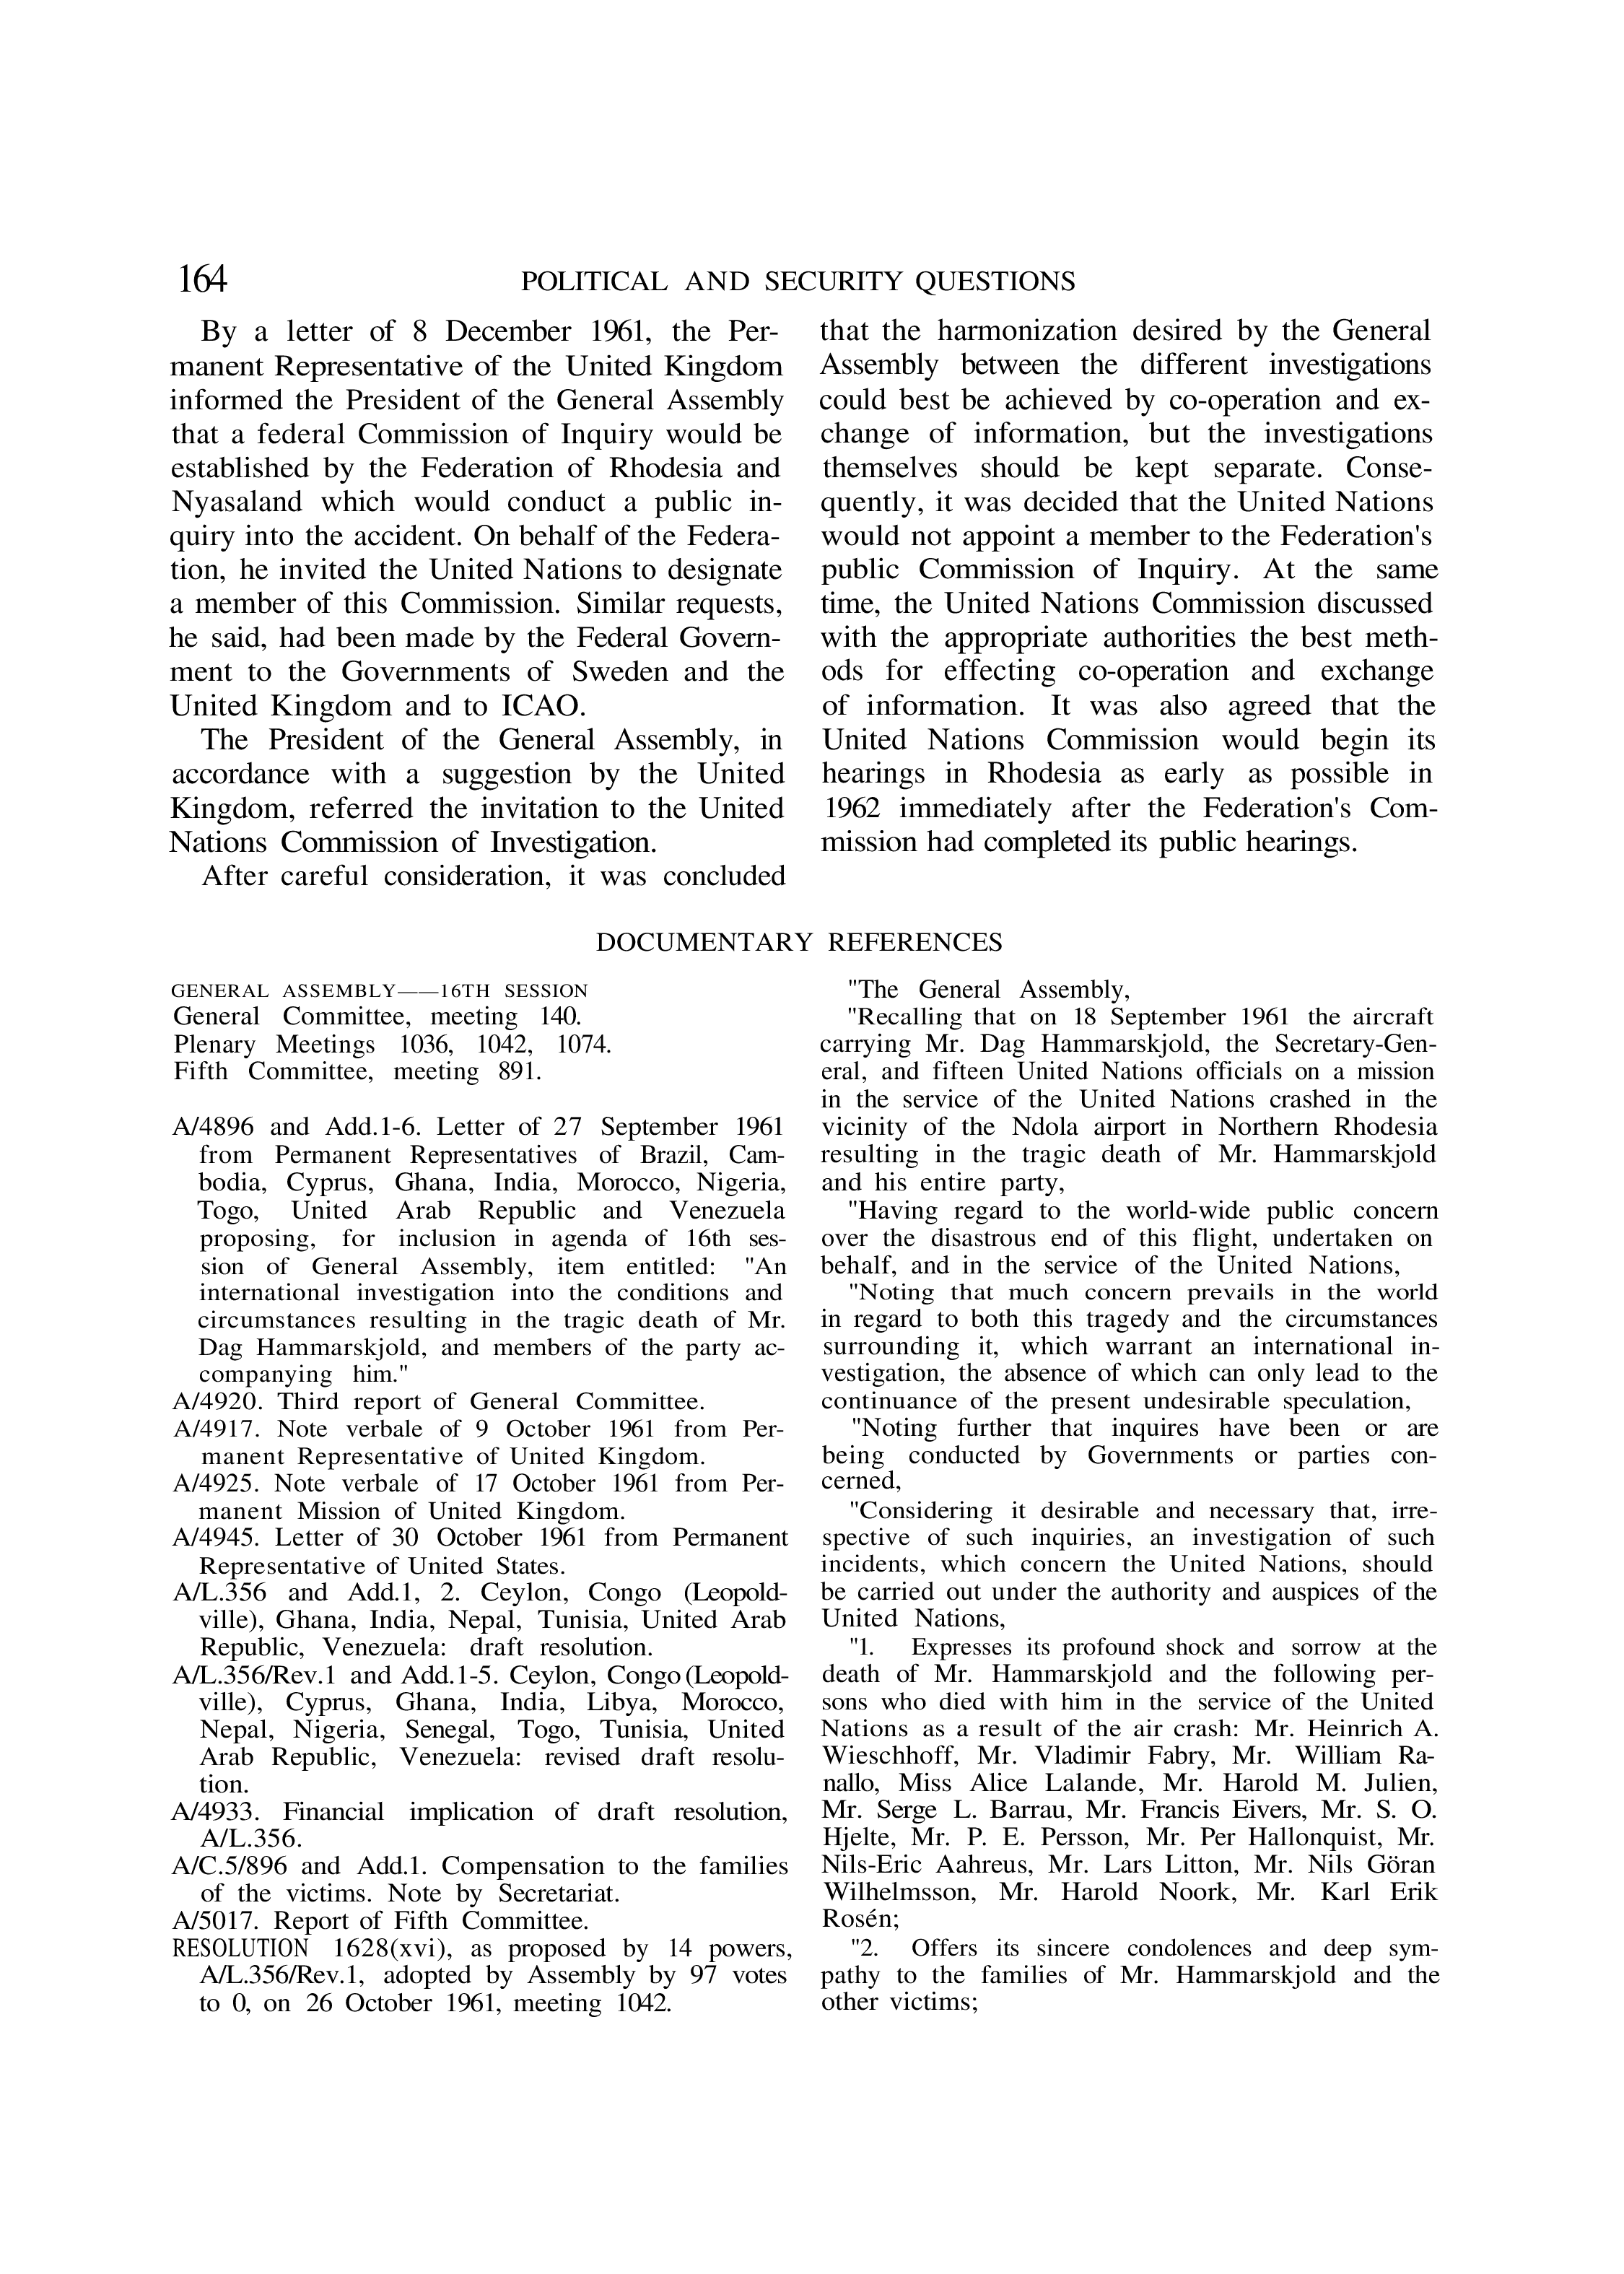 YUN Volume_Page 1961_175